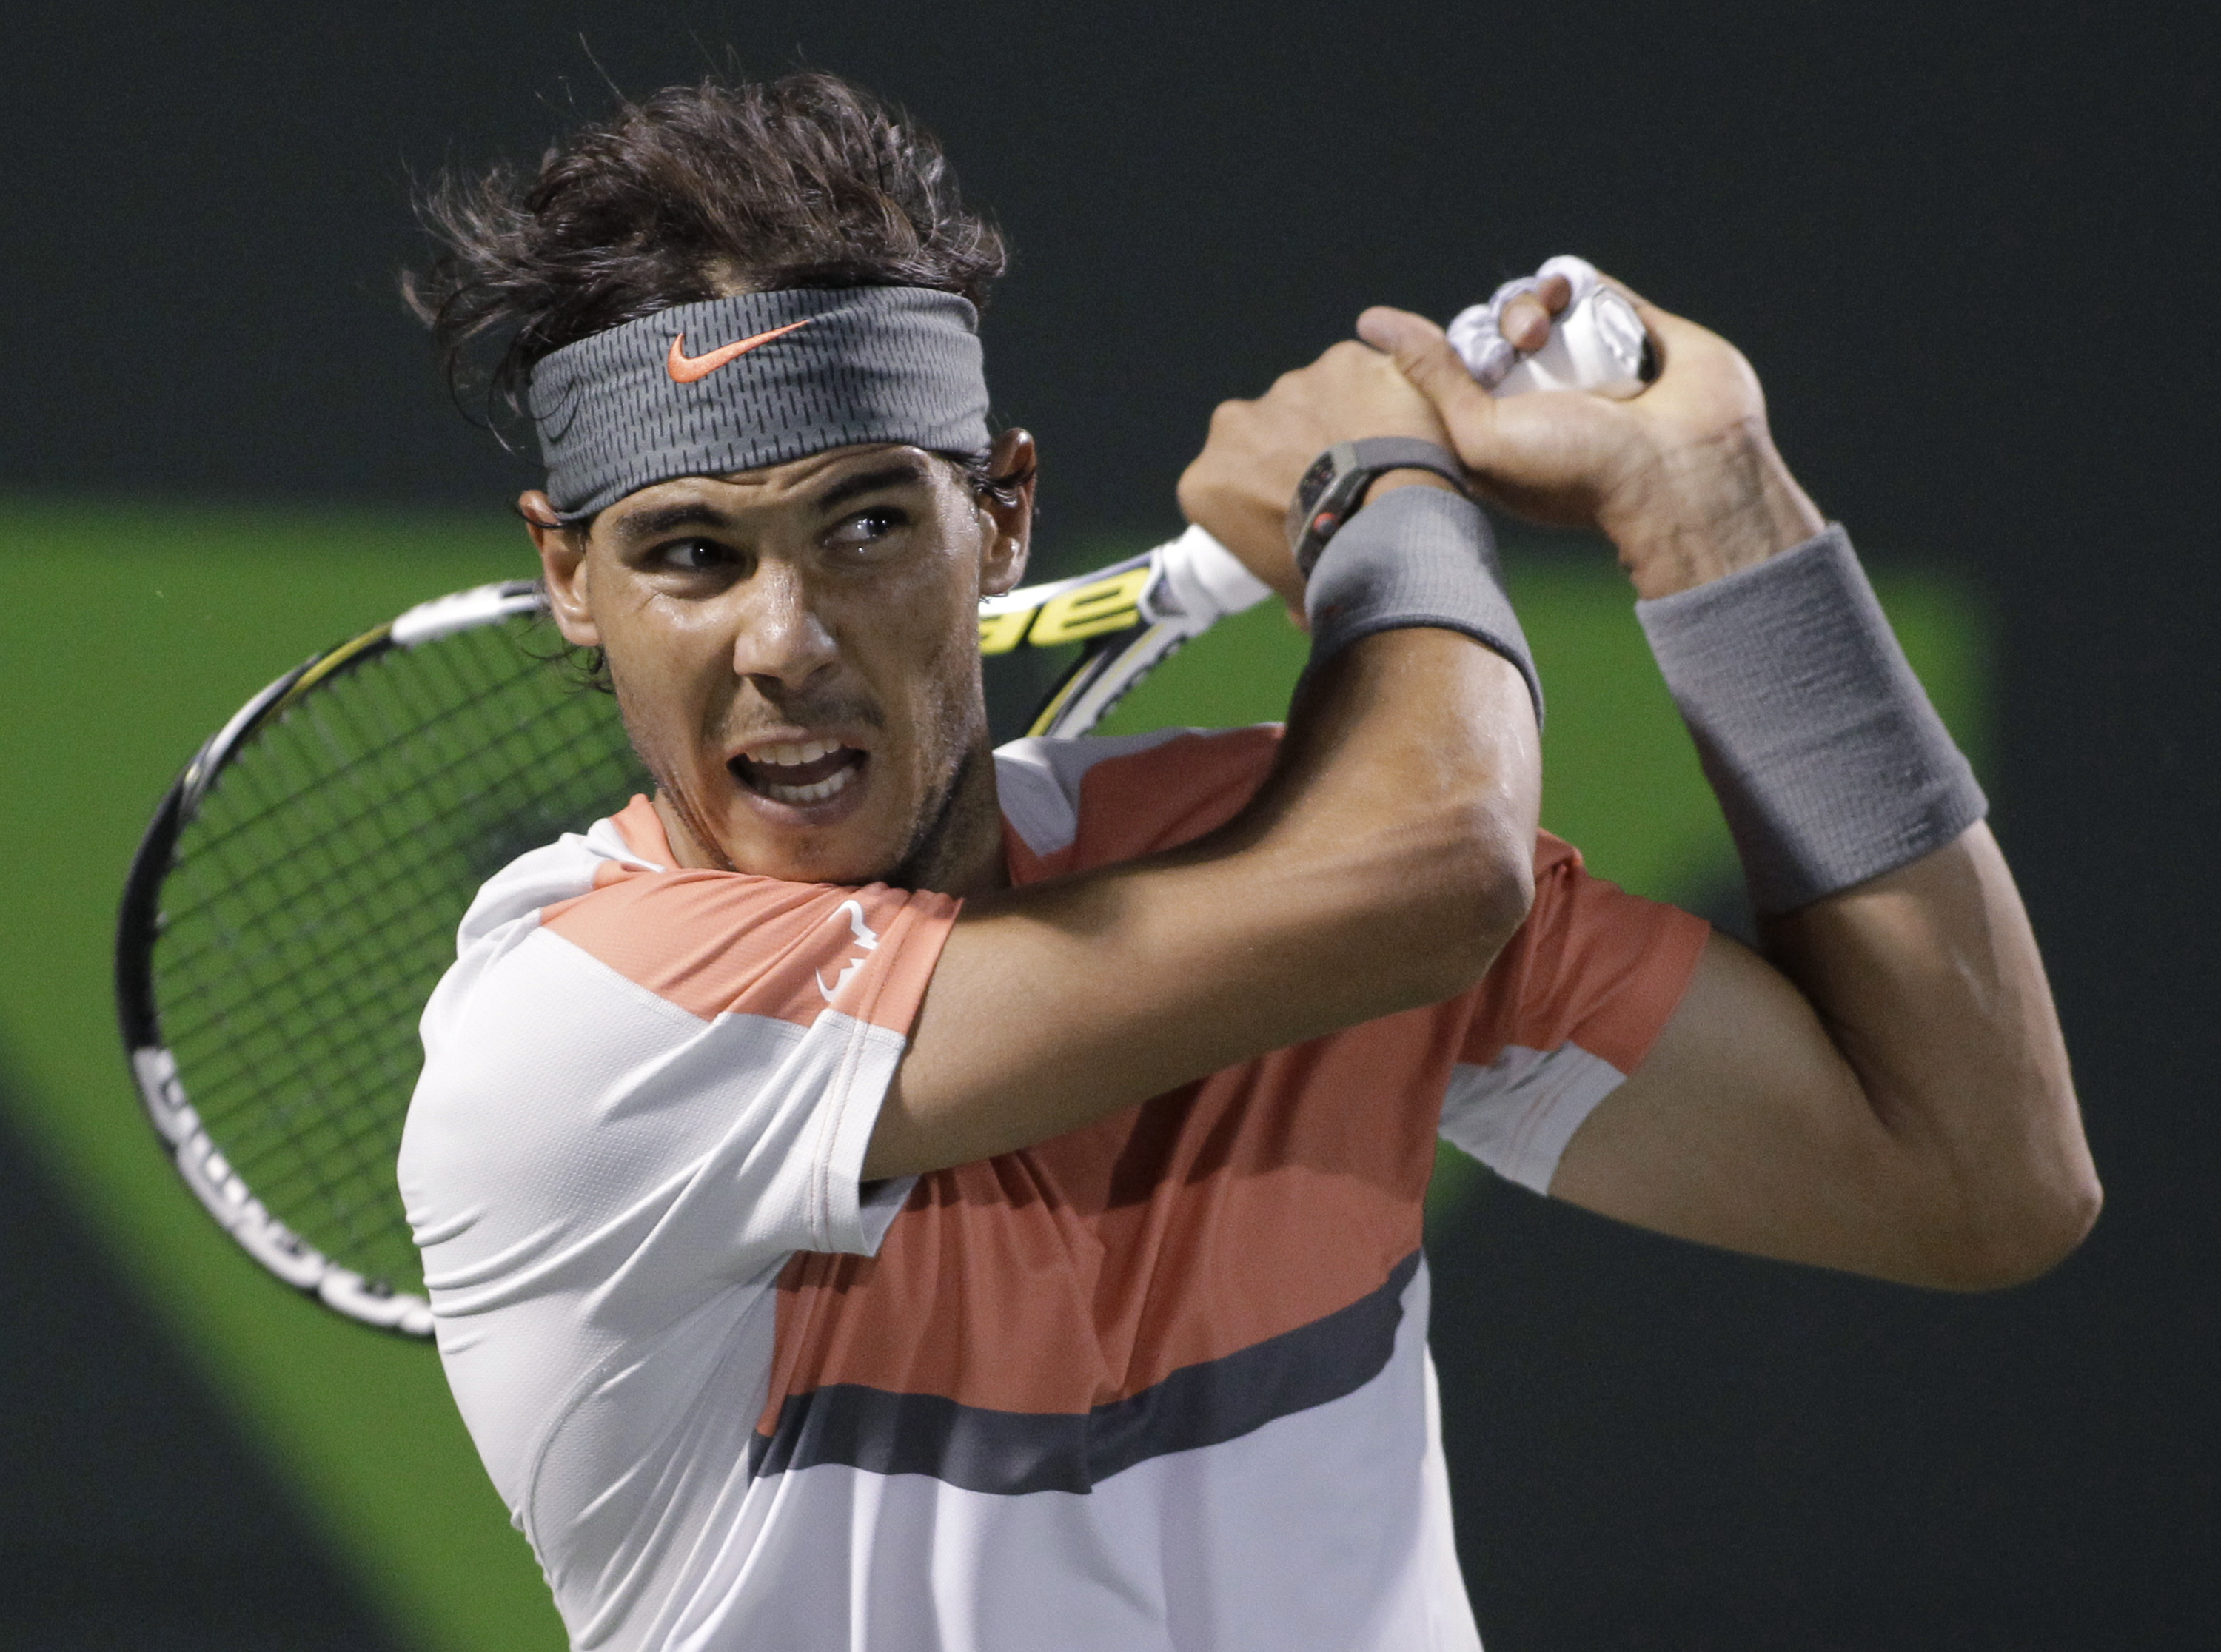 Rafael Nadal follows through on a return to Fabio Fogniniduring the Sony Open in Key Biscayne, Florida. Nadal won 6-2, 6-2. Photo: AP